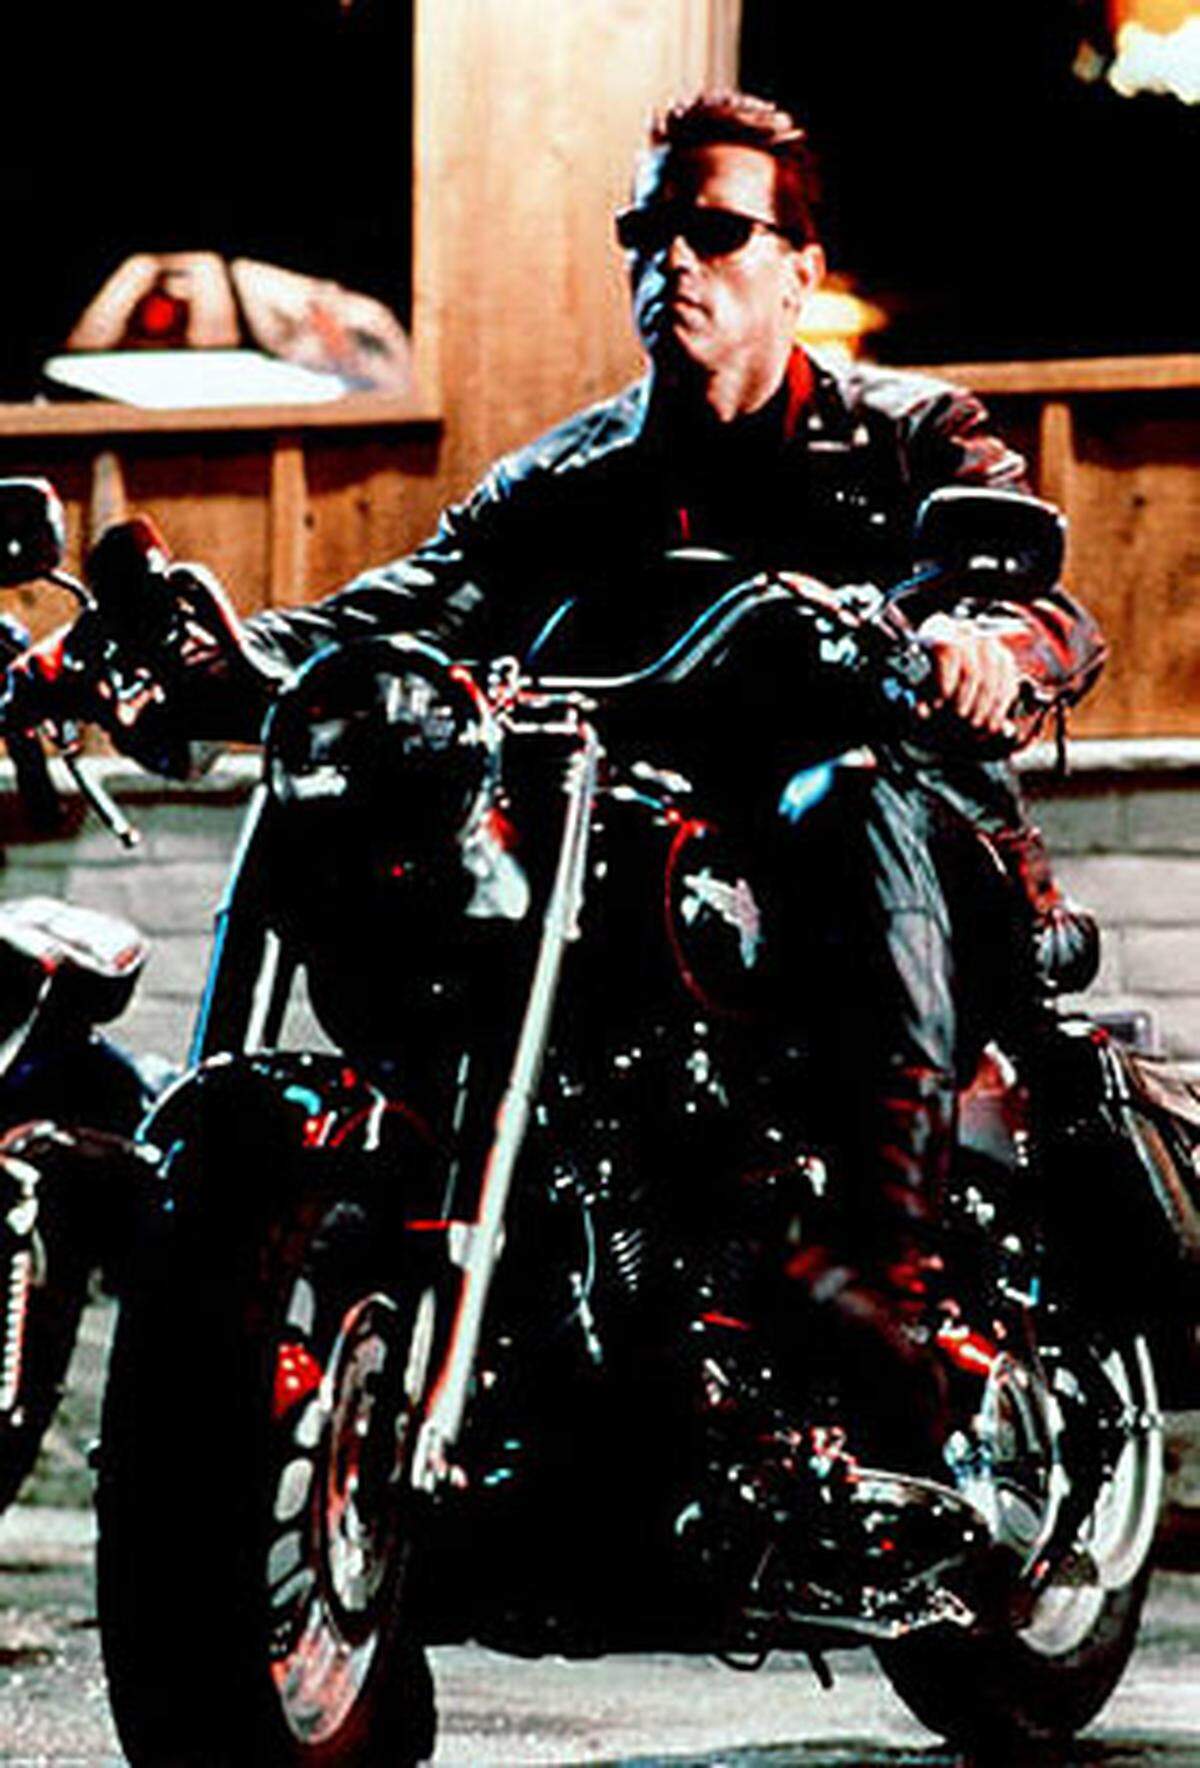 Endgültigen Weltruhm erlangte Arnold Schwarzenegger als Cyborg T-800 in James Camerons Science-Fiction-Spektakel "Terminator" (1984). Seine Textzeile "I´ll be back" wurde legendär.